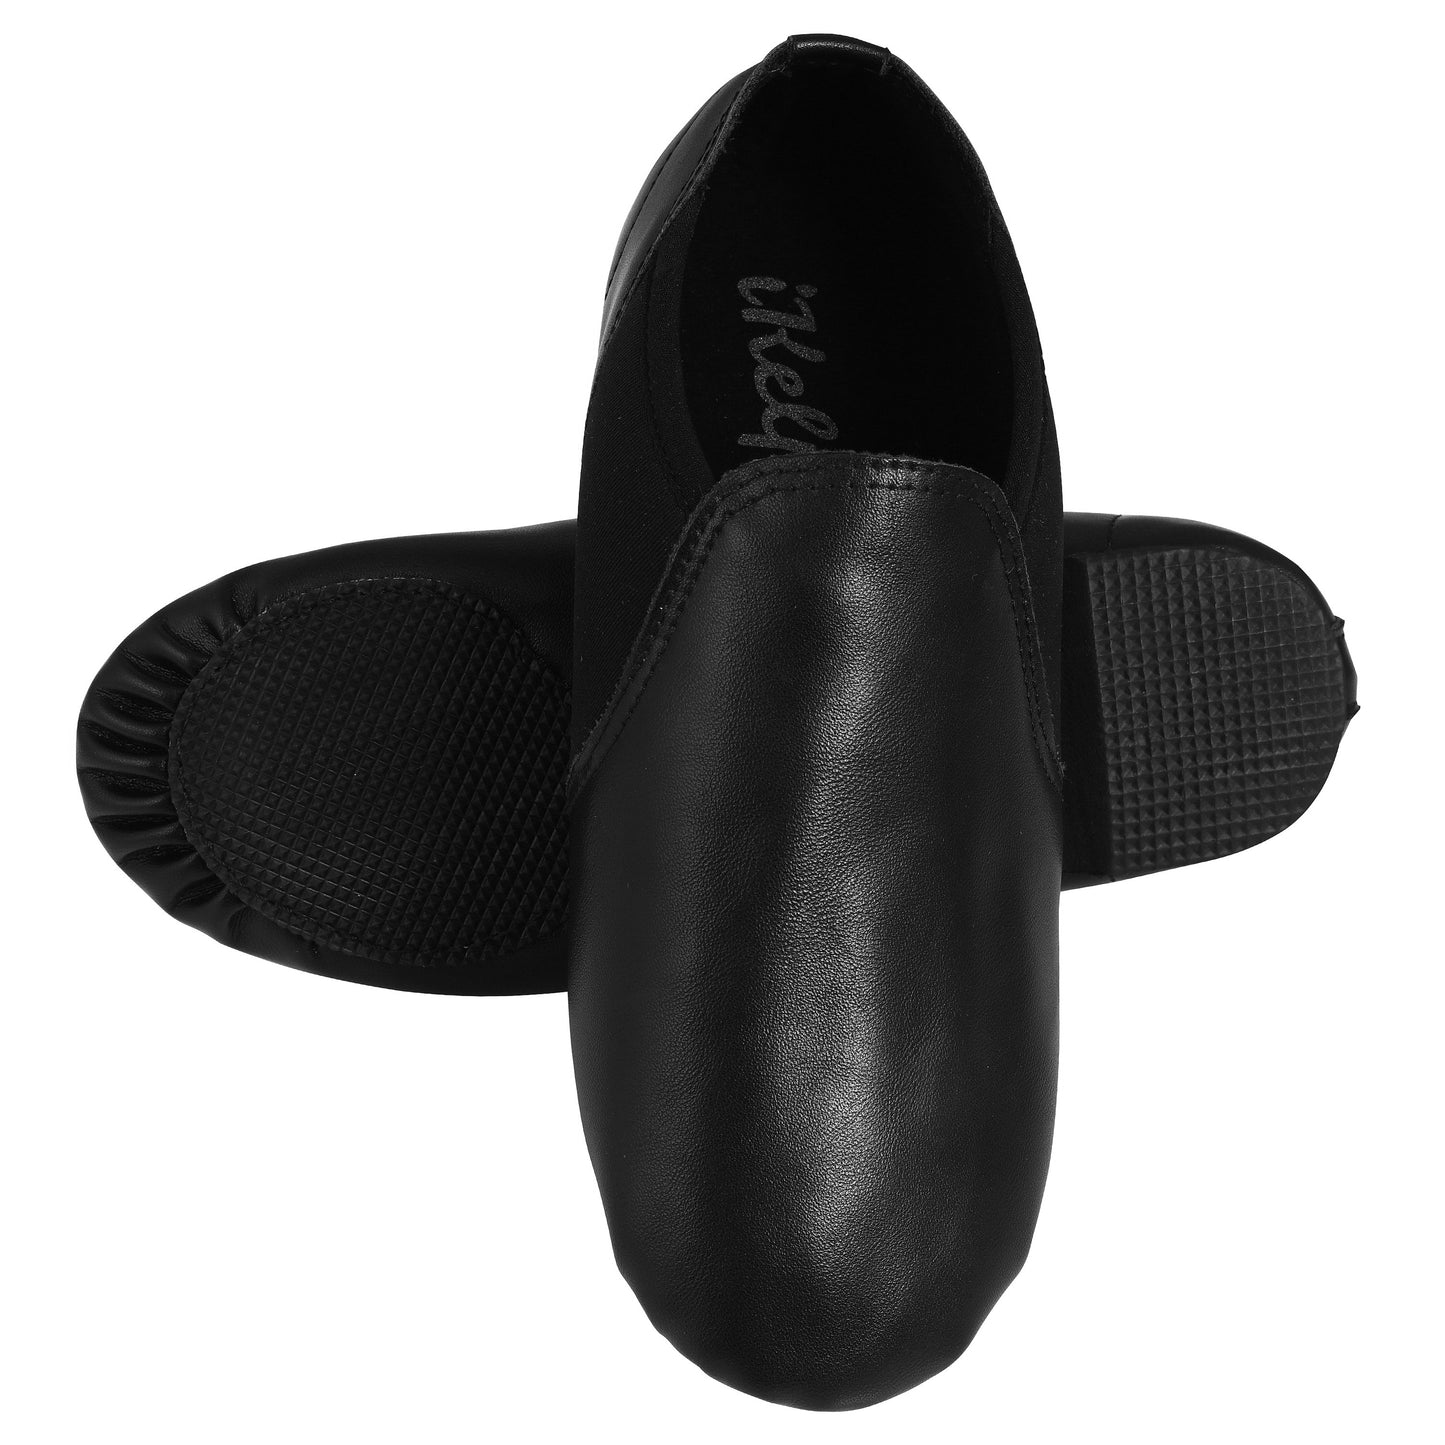 Black jazz dance shoes